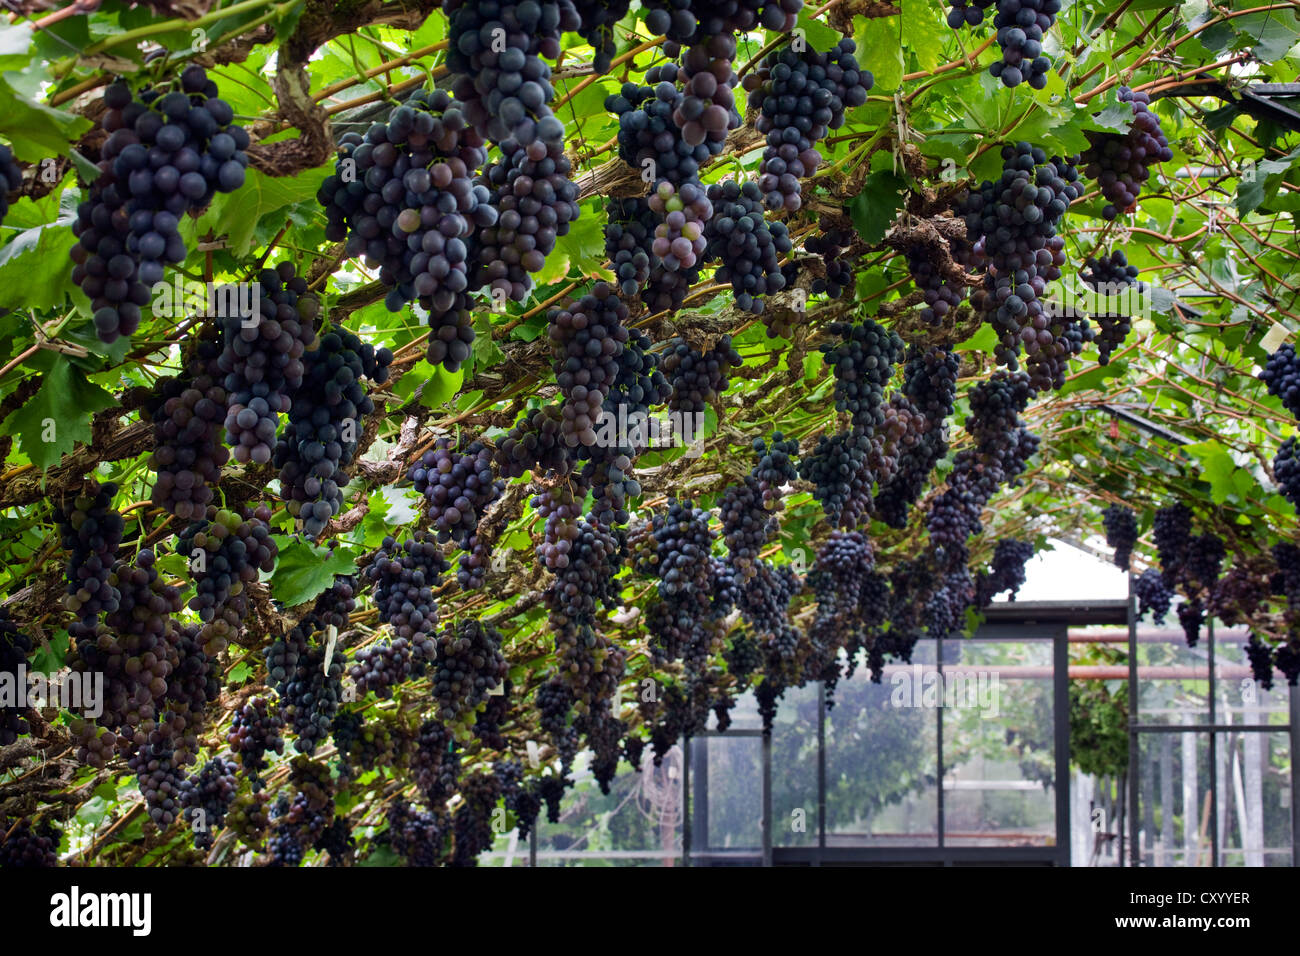 Table grapes (Vitis vinifera) growing on vine in greenhouse in Flemish Brabant, Flanders, Belgium Stock Photo